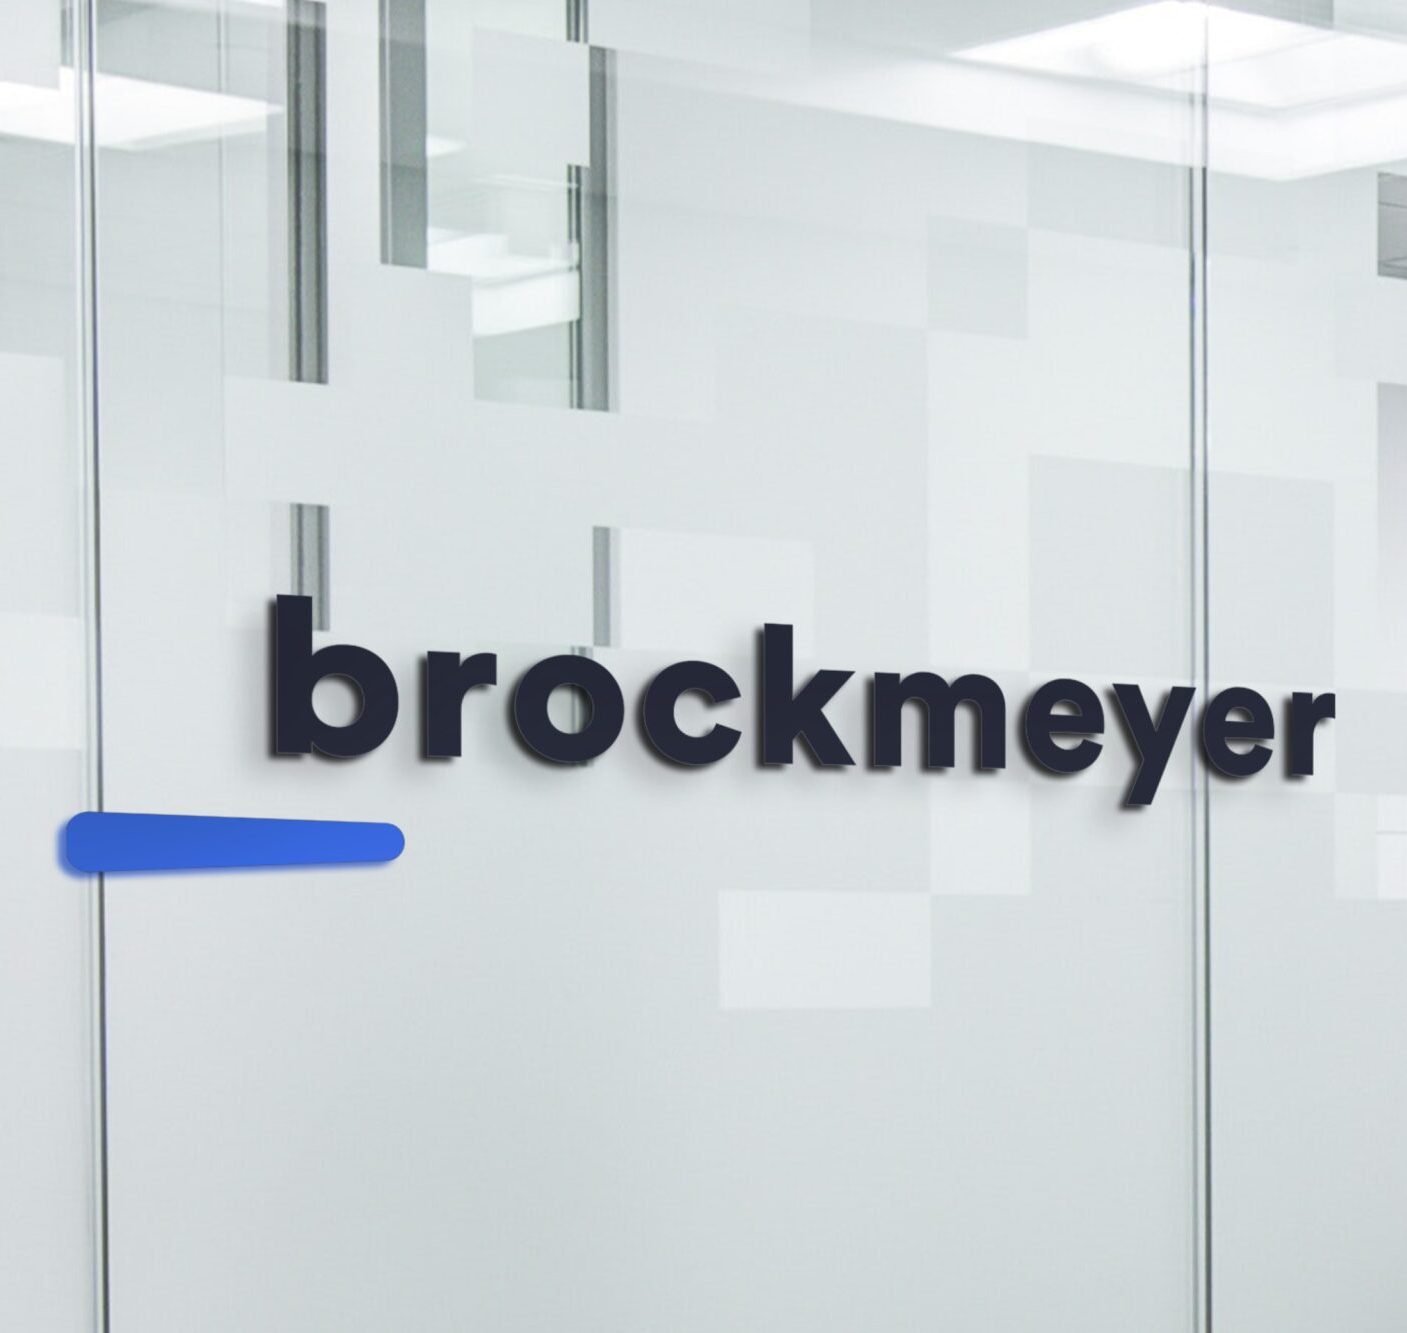 030-brockmeyer_2-scaled-1